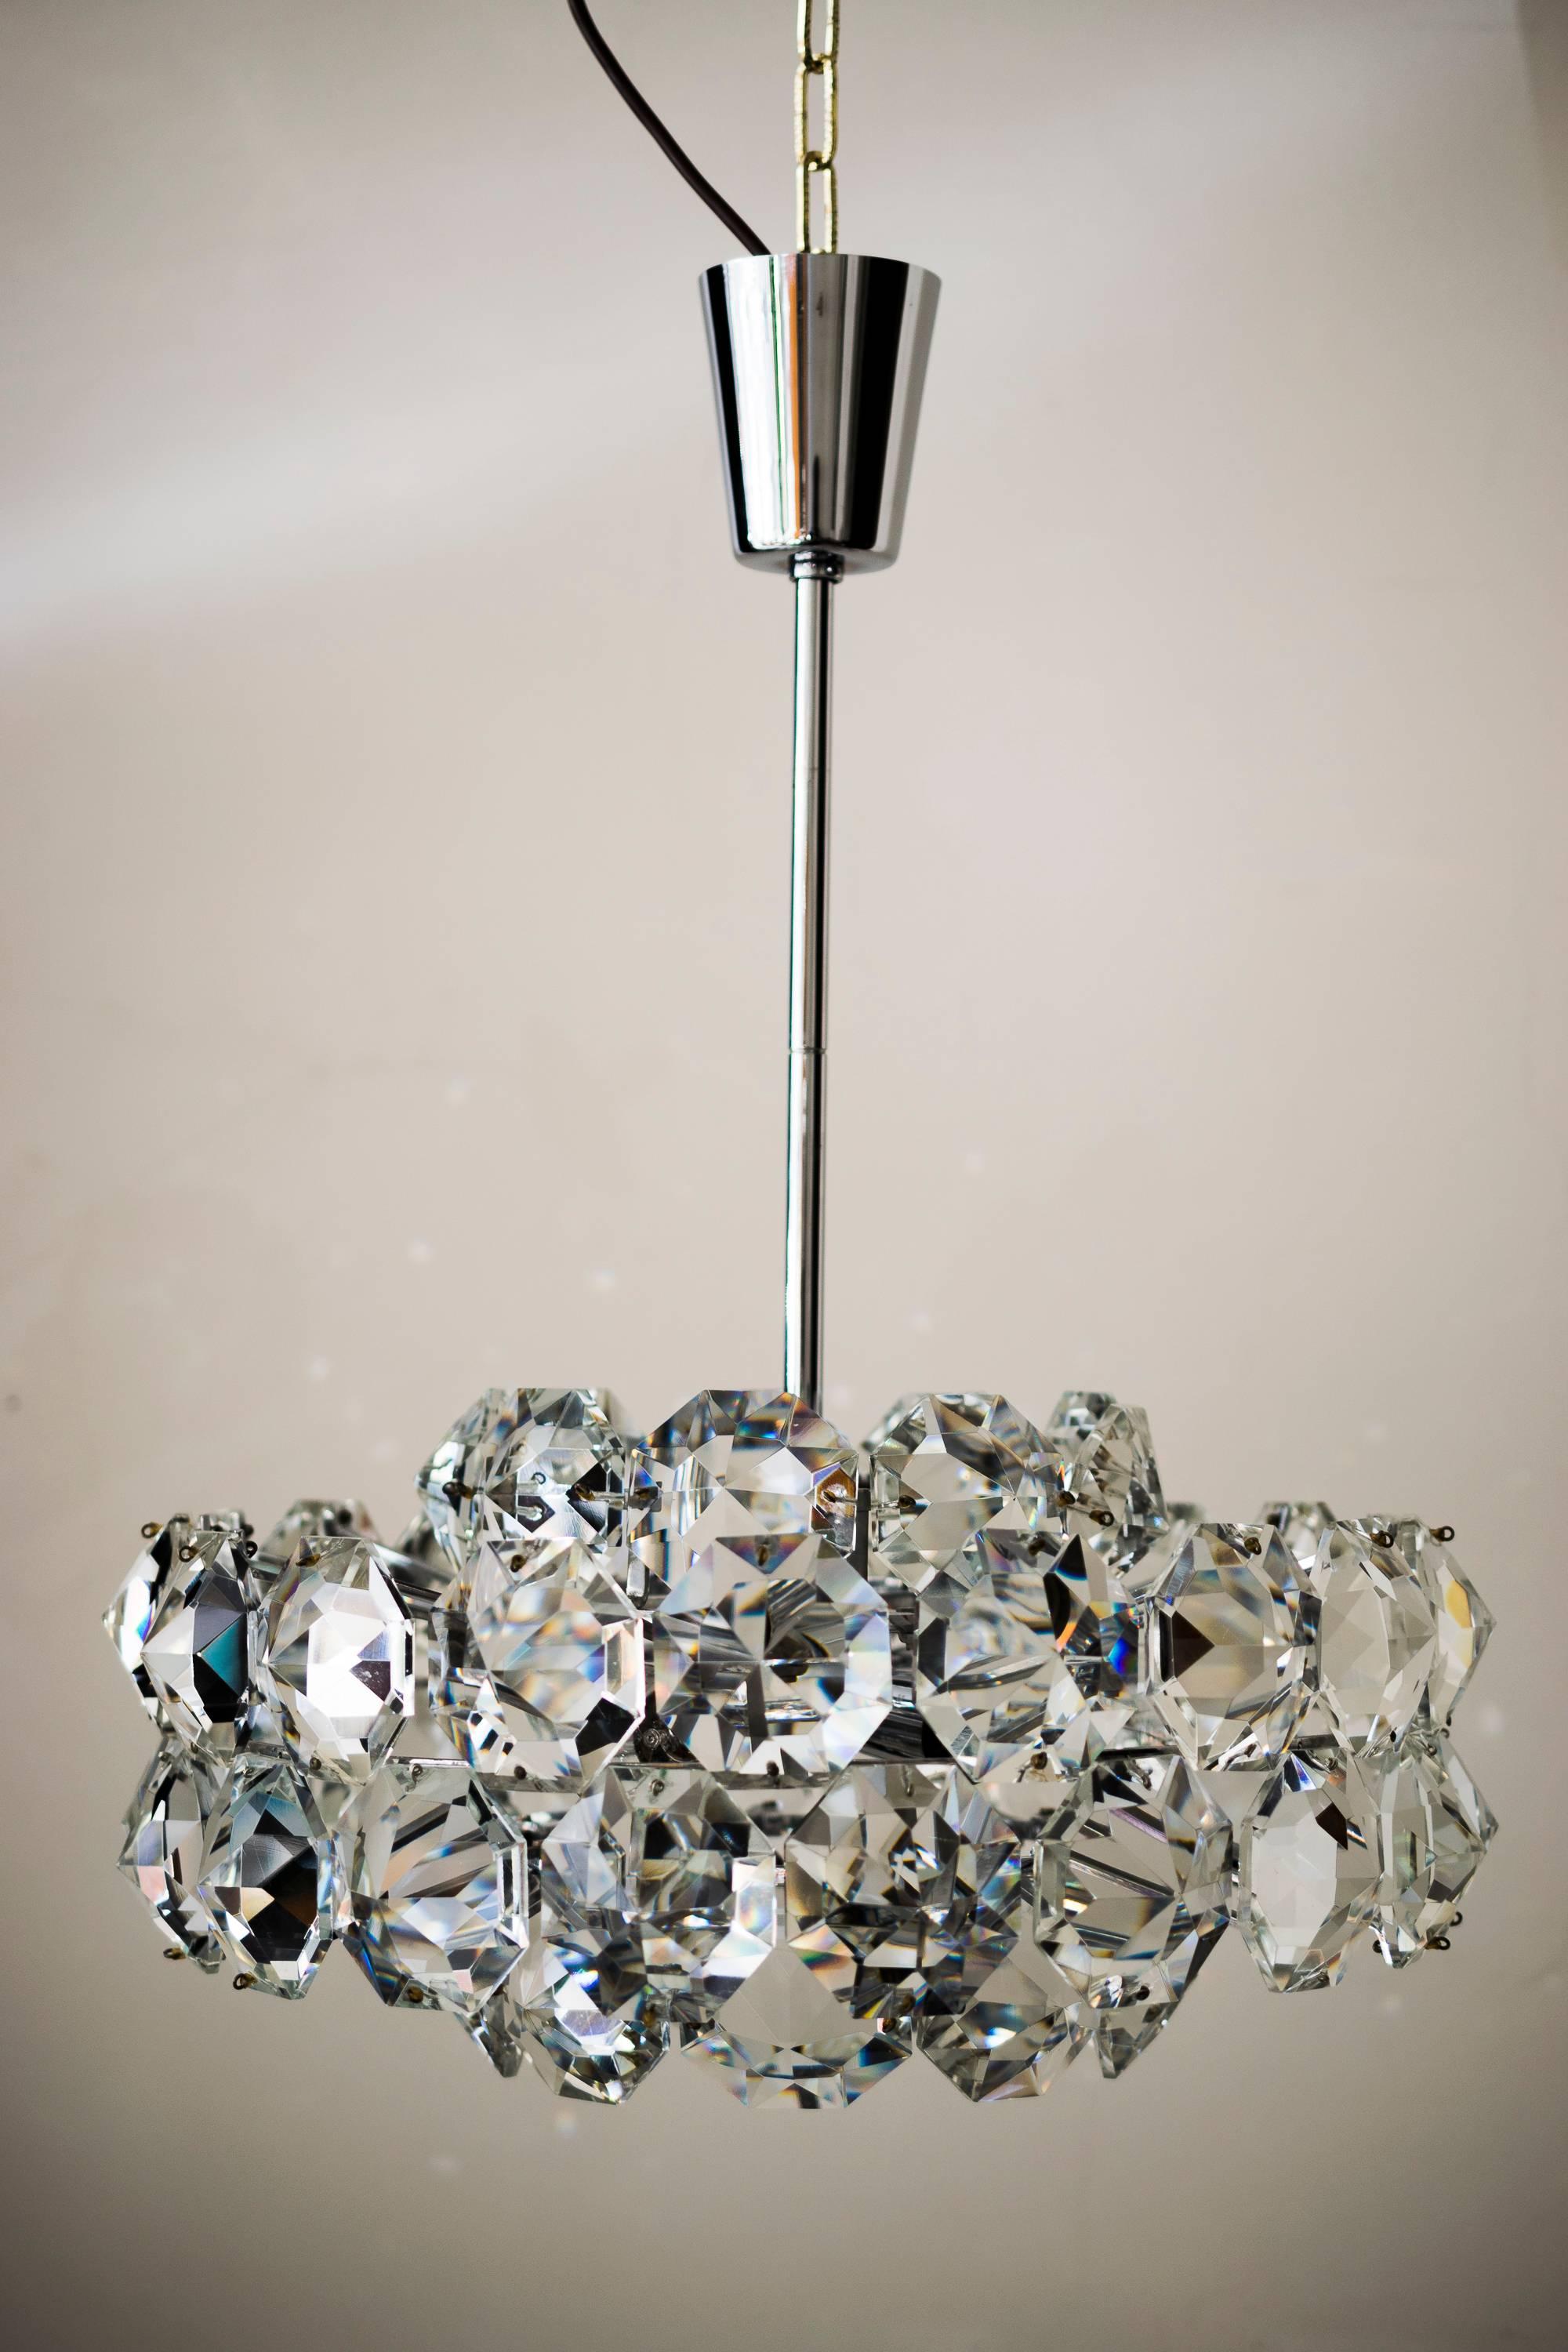 Bakalowits chandelier, 1960s
Original condition.